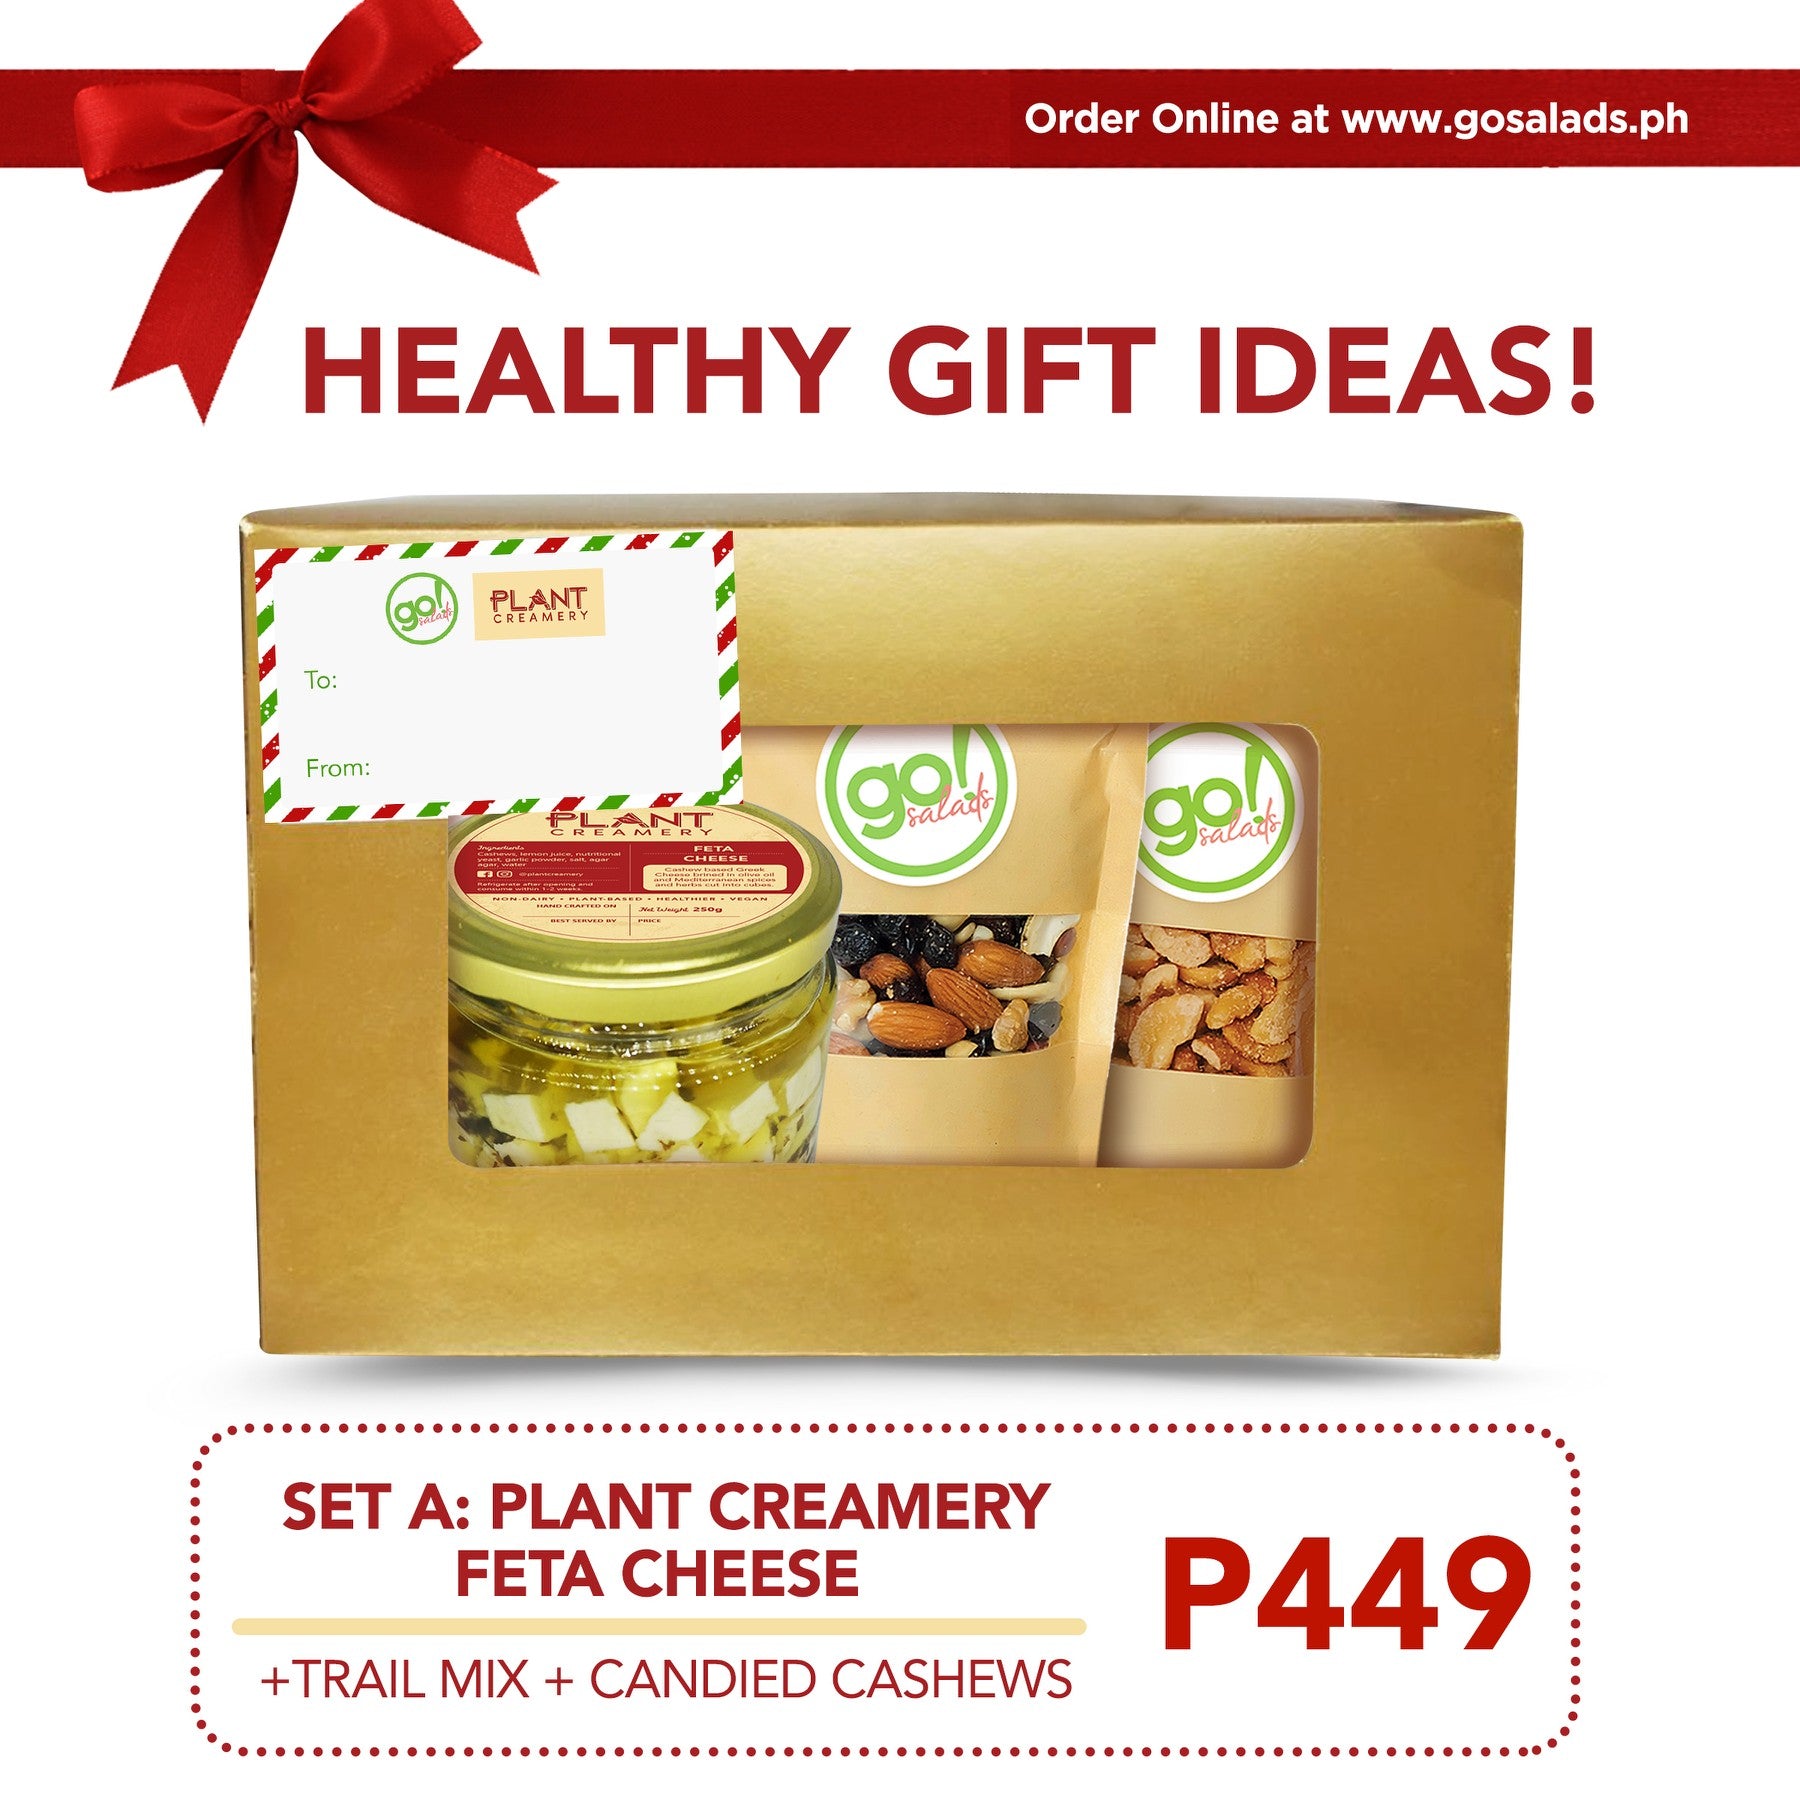 Plant Creamery Feta Cheese Gift Box - Go! Salads Grocer